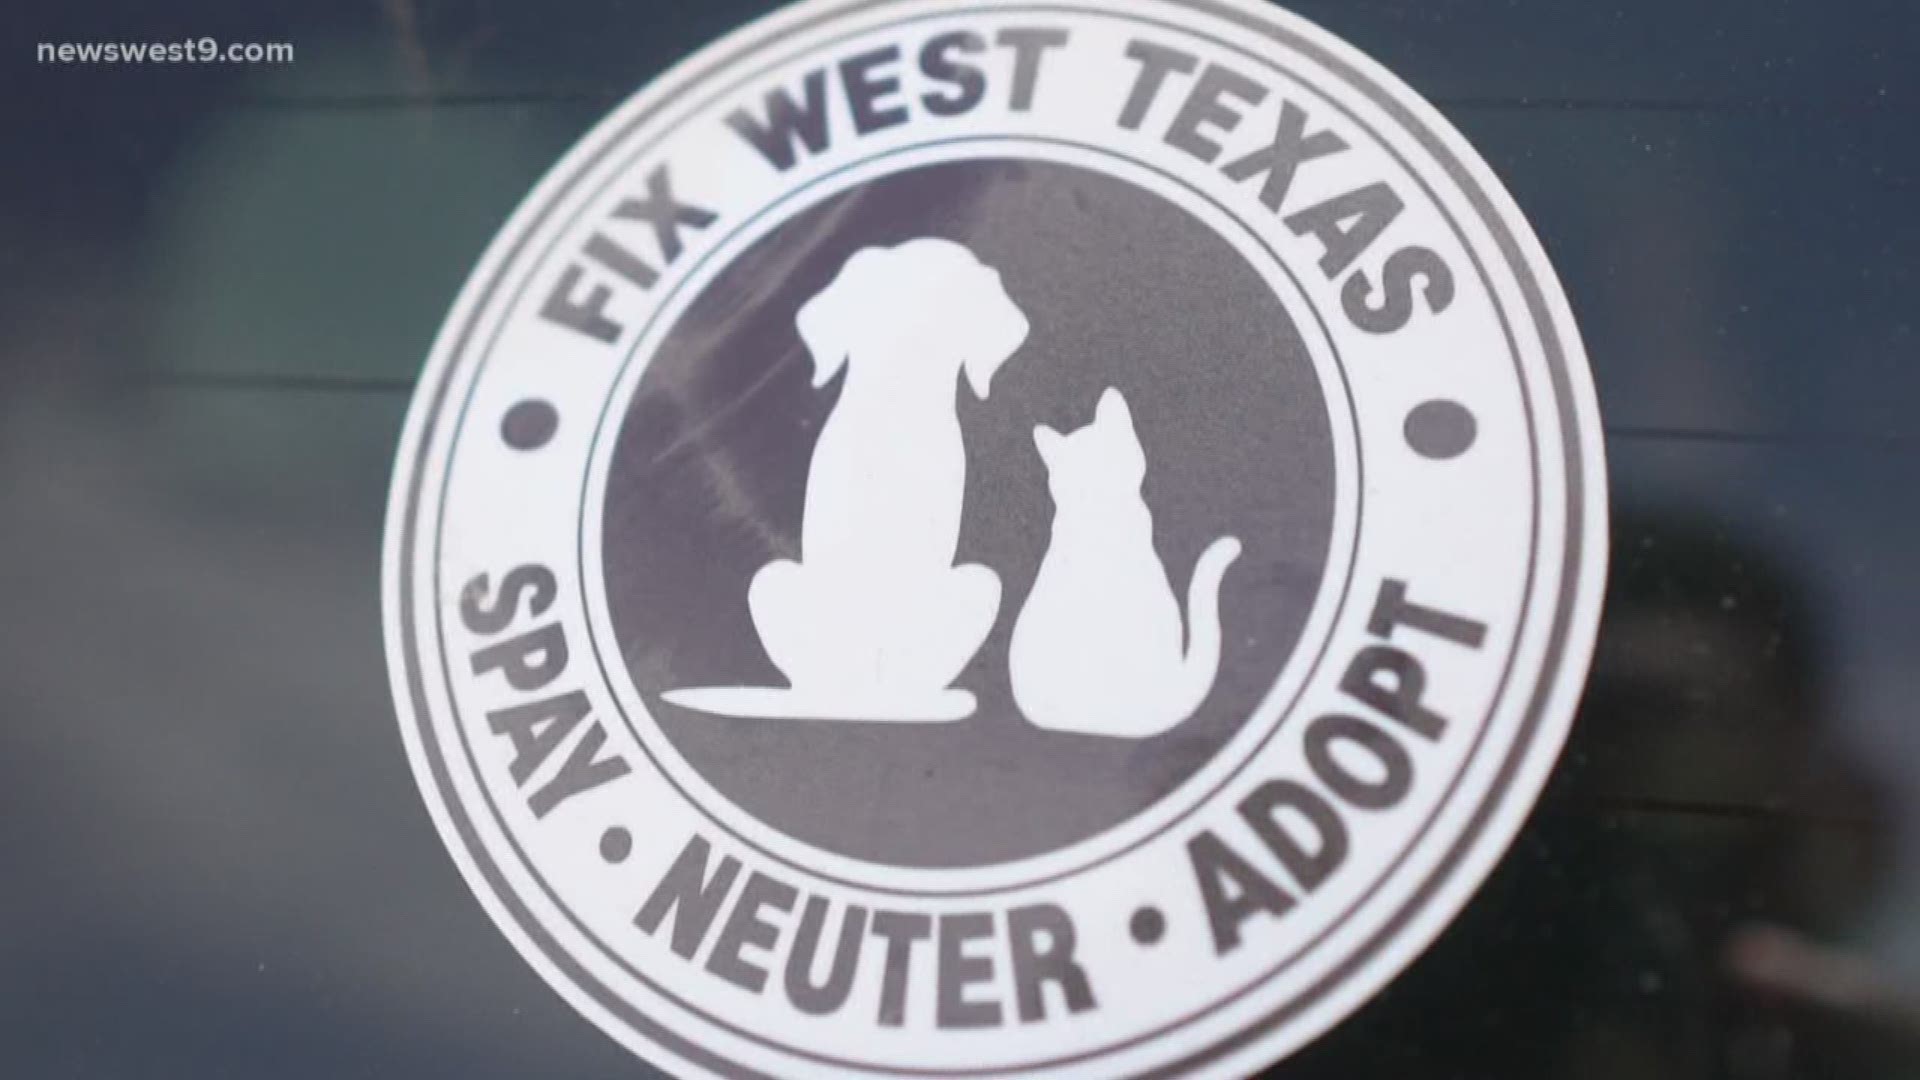 Fix West Texas providing spays and neuters.